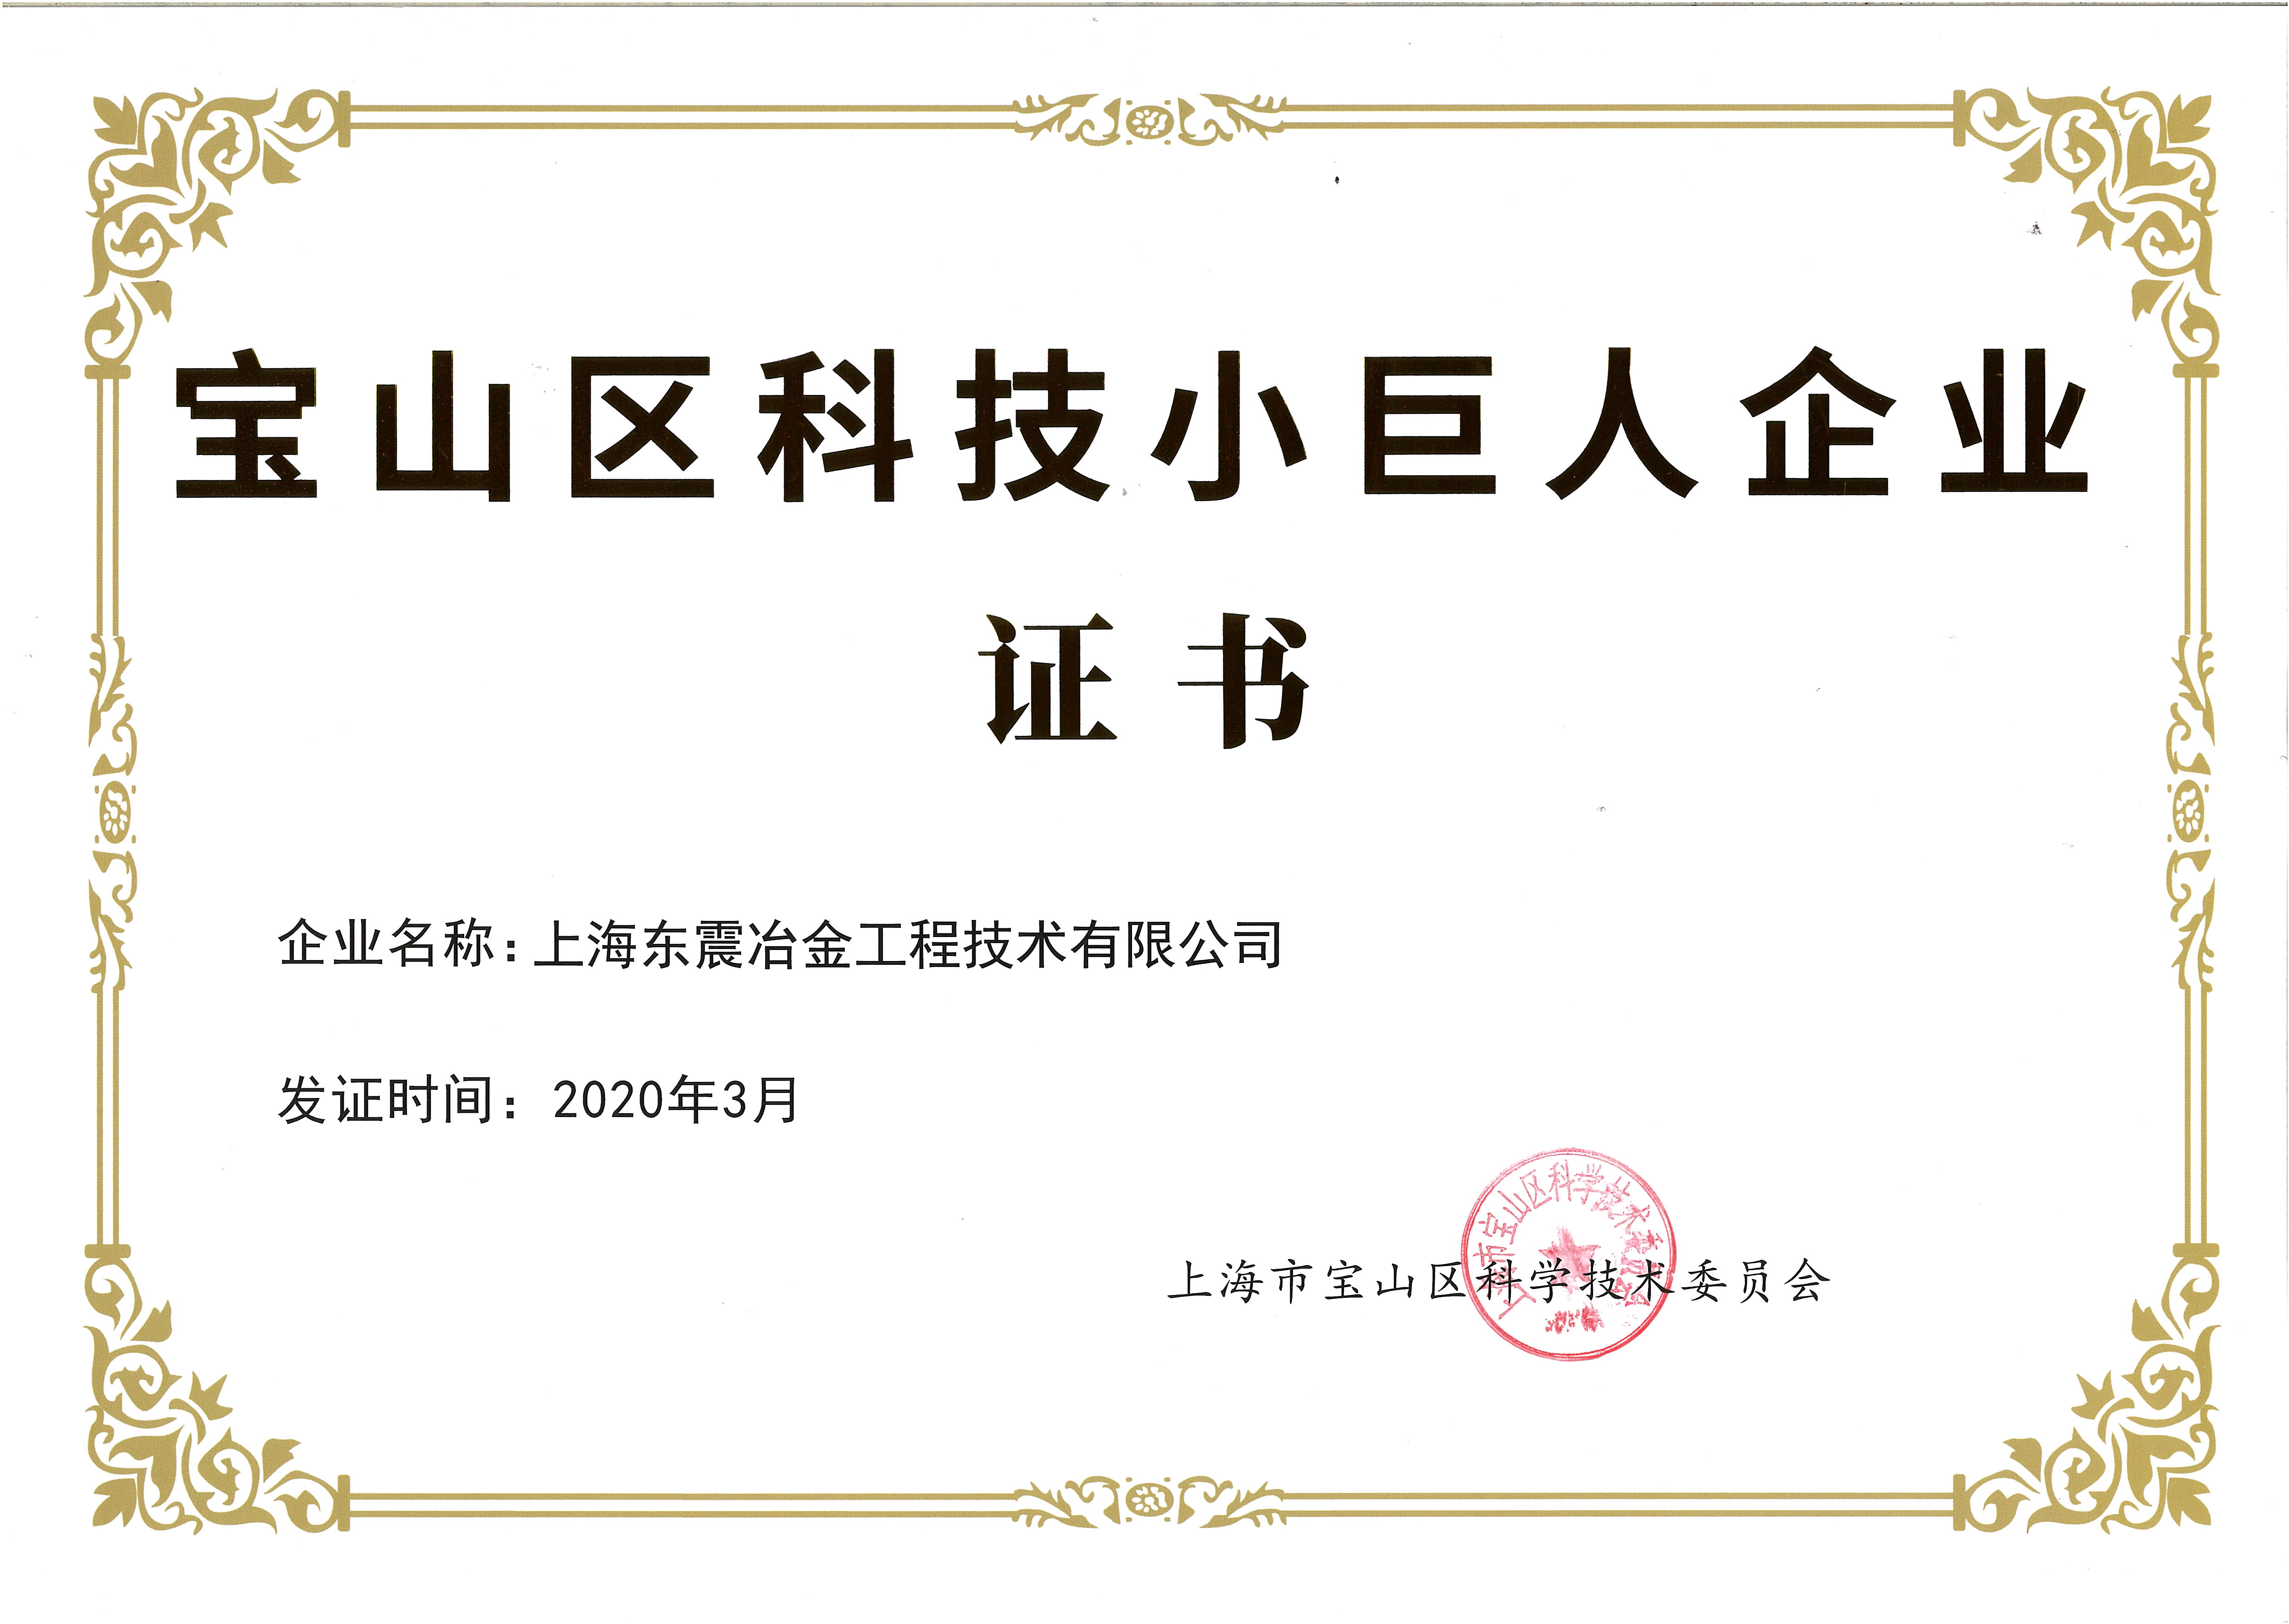 Bao Shan District DistrictTechnology Small Giant Enterprise Certificate